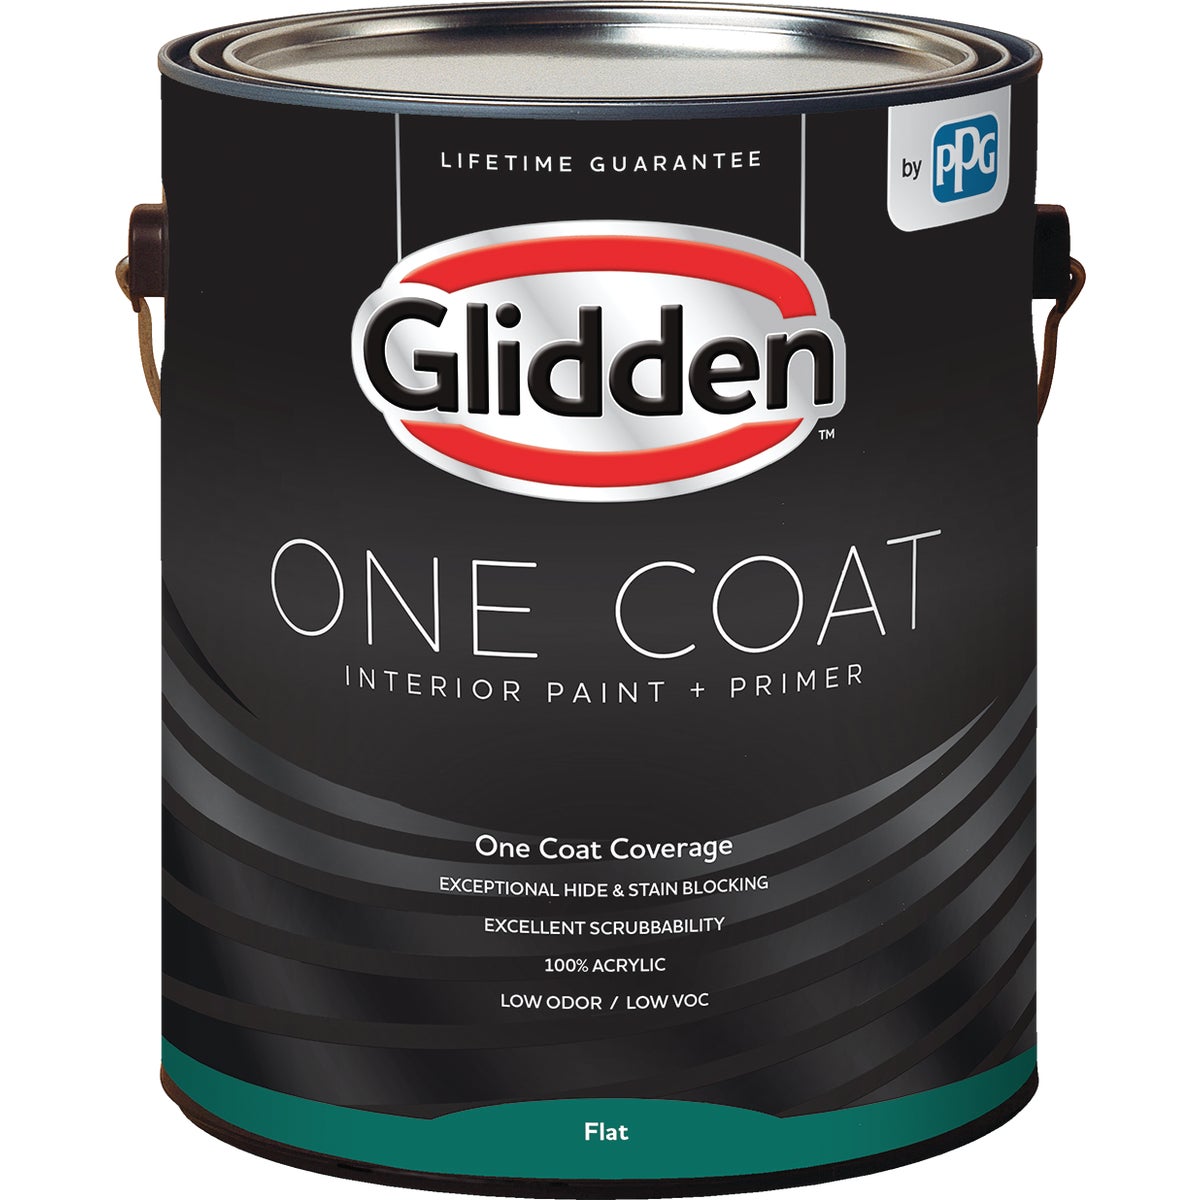 Glidden One Coat Interior Paint + Primer Flat Midtone Base 1 Gallon